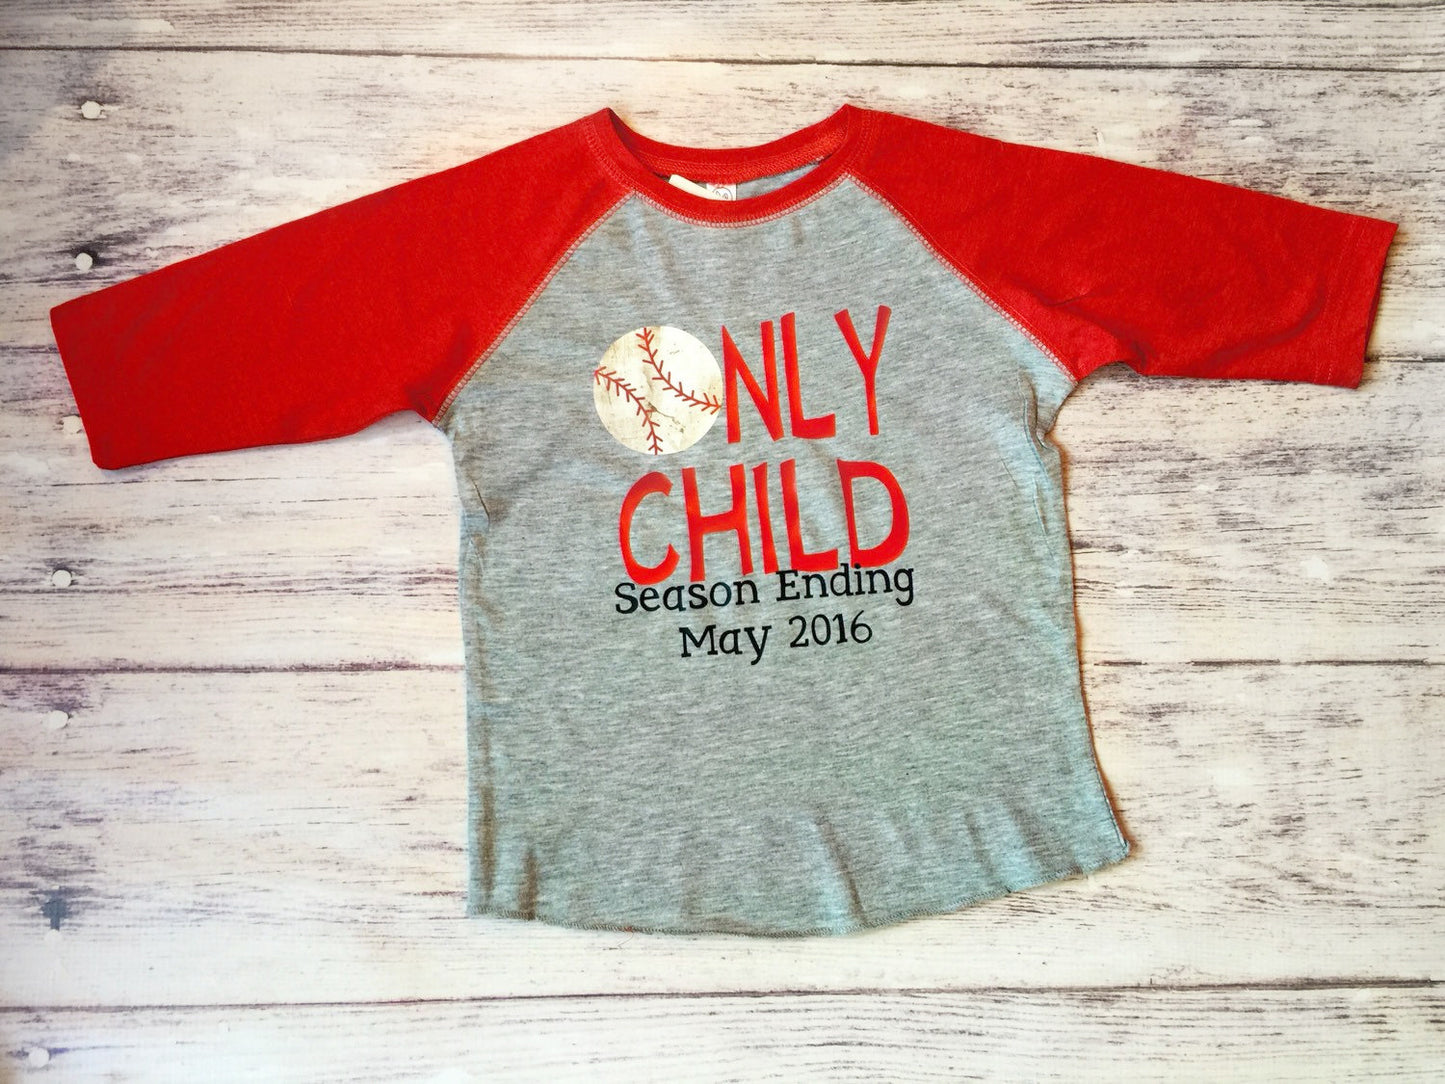 Only Child Shirt, Only Child Expiring Shirt, Only Child Season Ending Shirt, Pregnancy Announcement, Only Child Shirt - Baseball - Purple Elephant STL